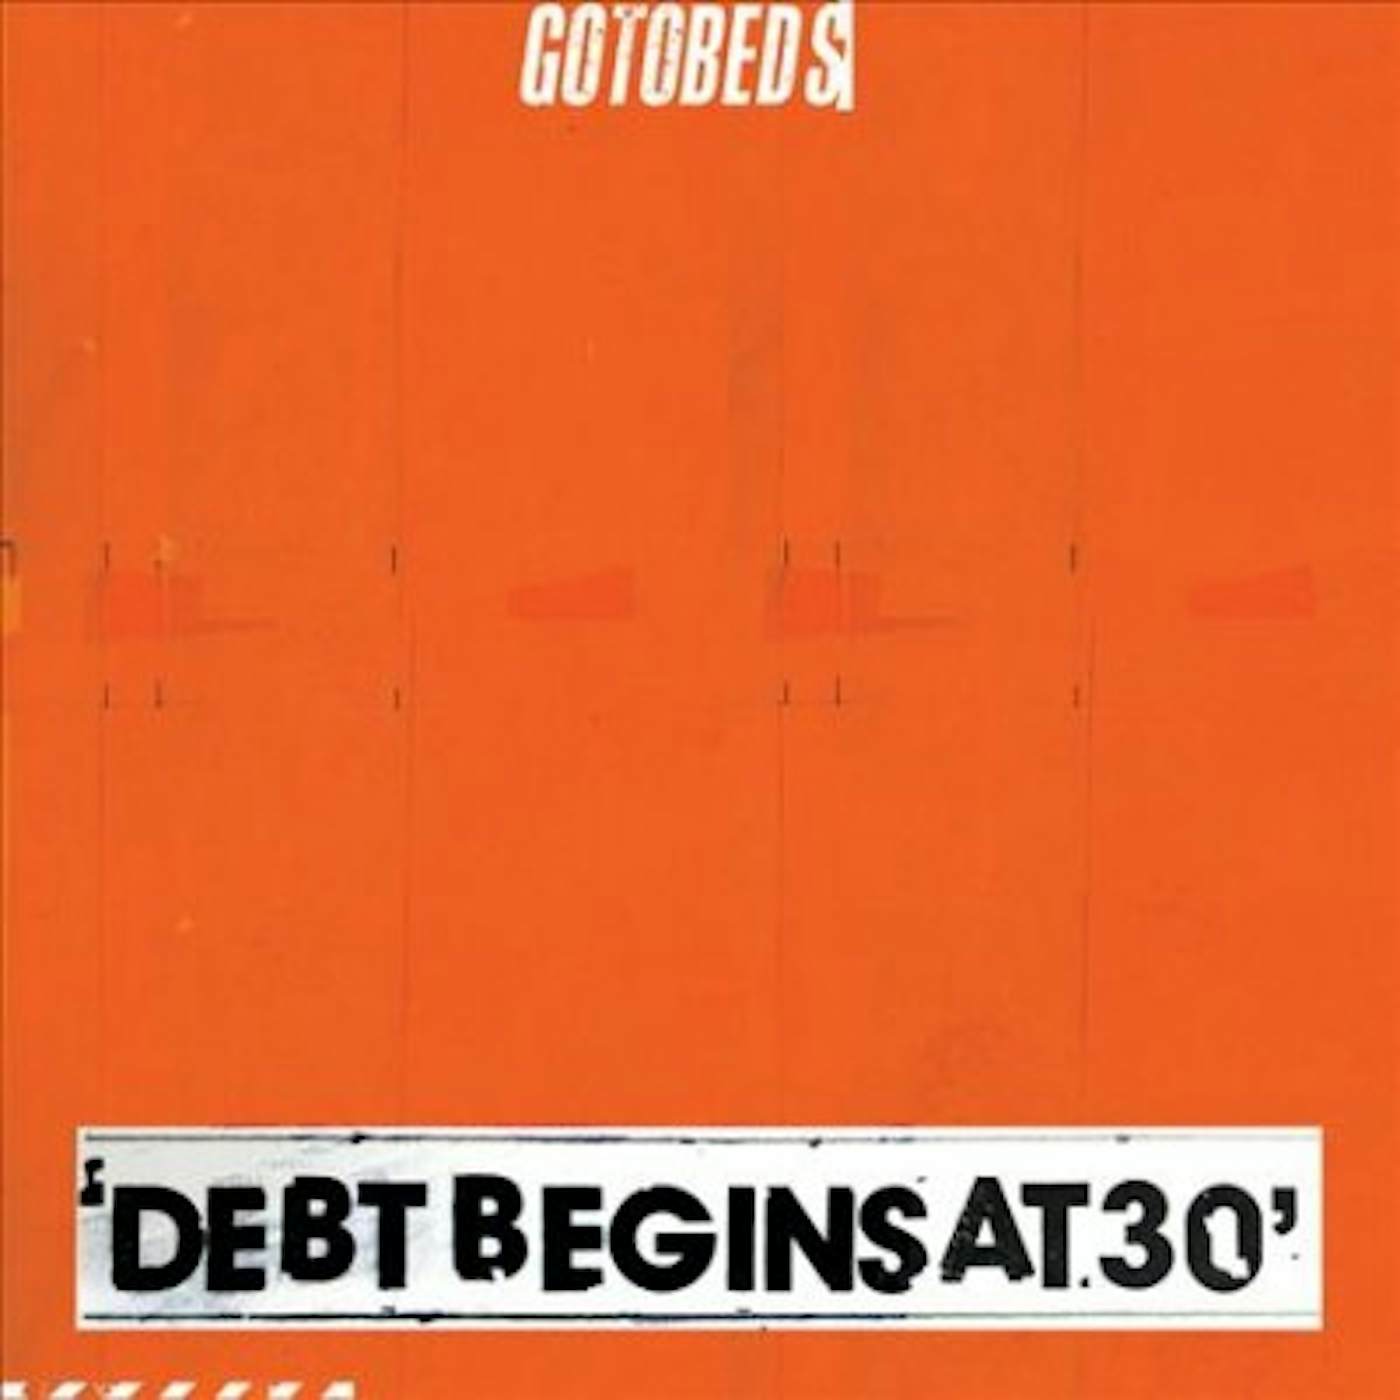 The Gotobeds Debt Begins At 30 CD